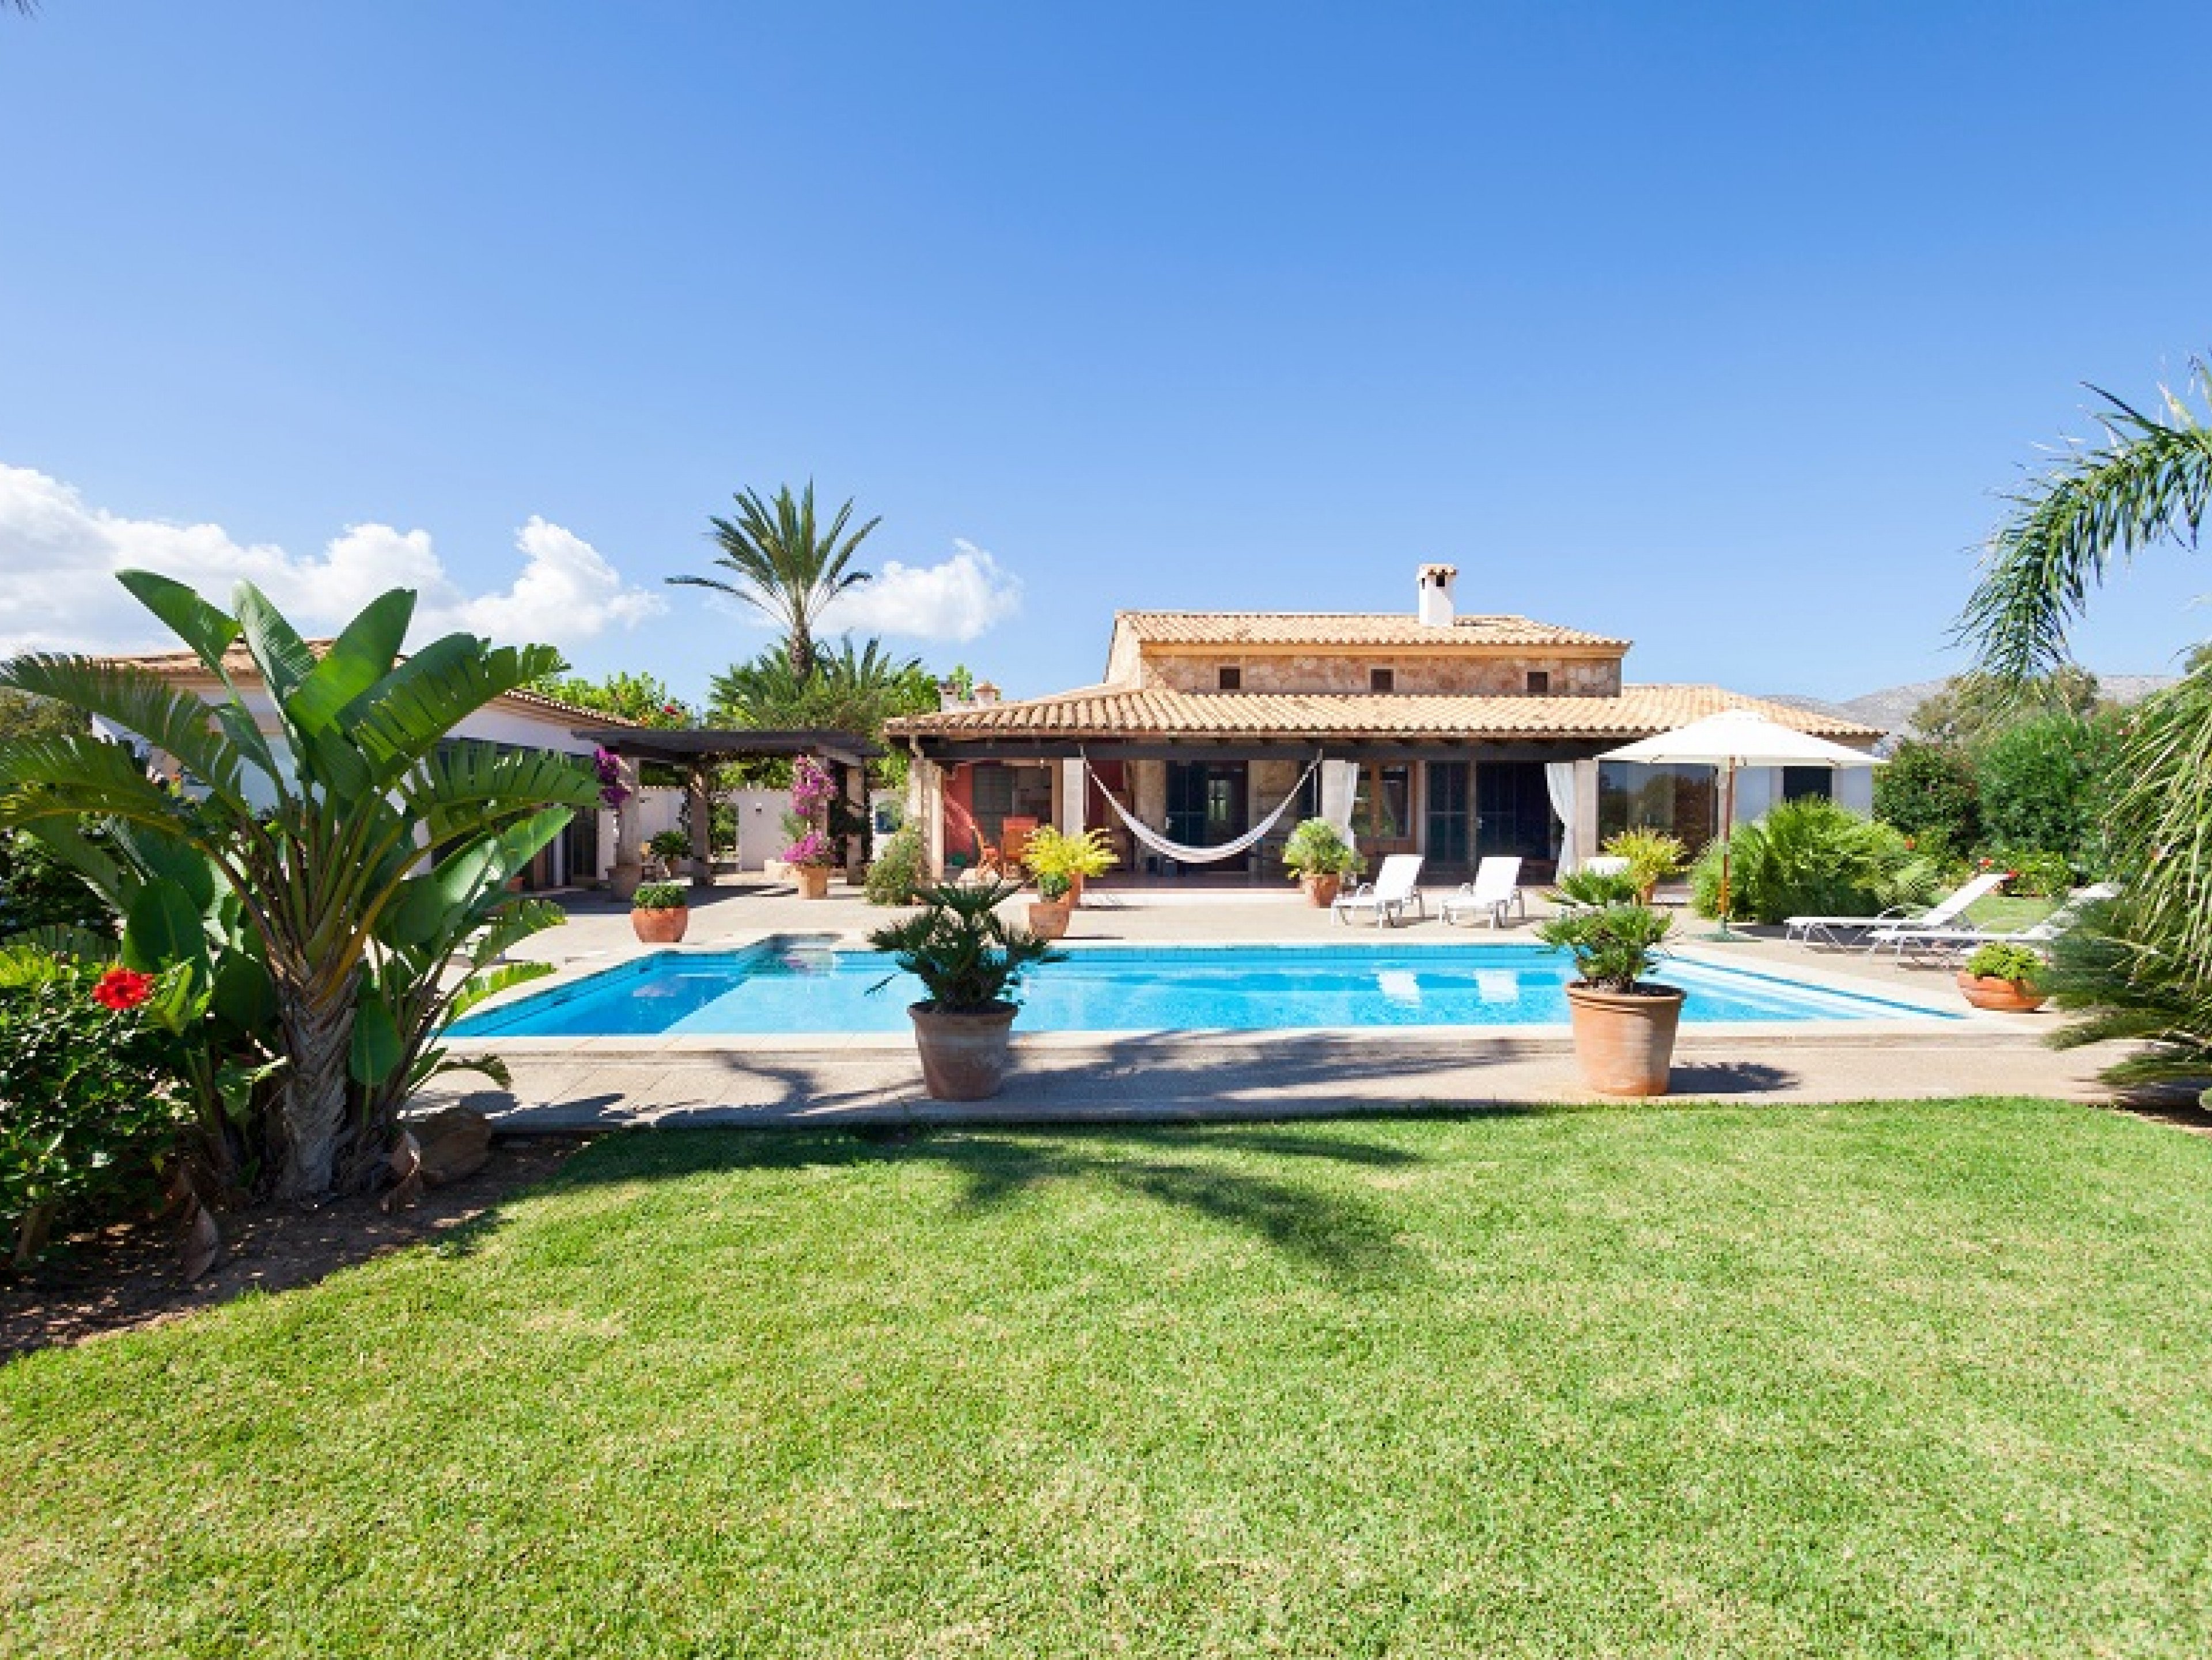 Aumadrava Gran - Majorca holiday villas with pools